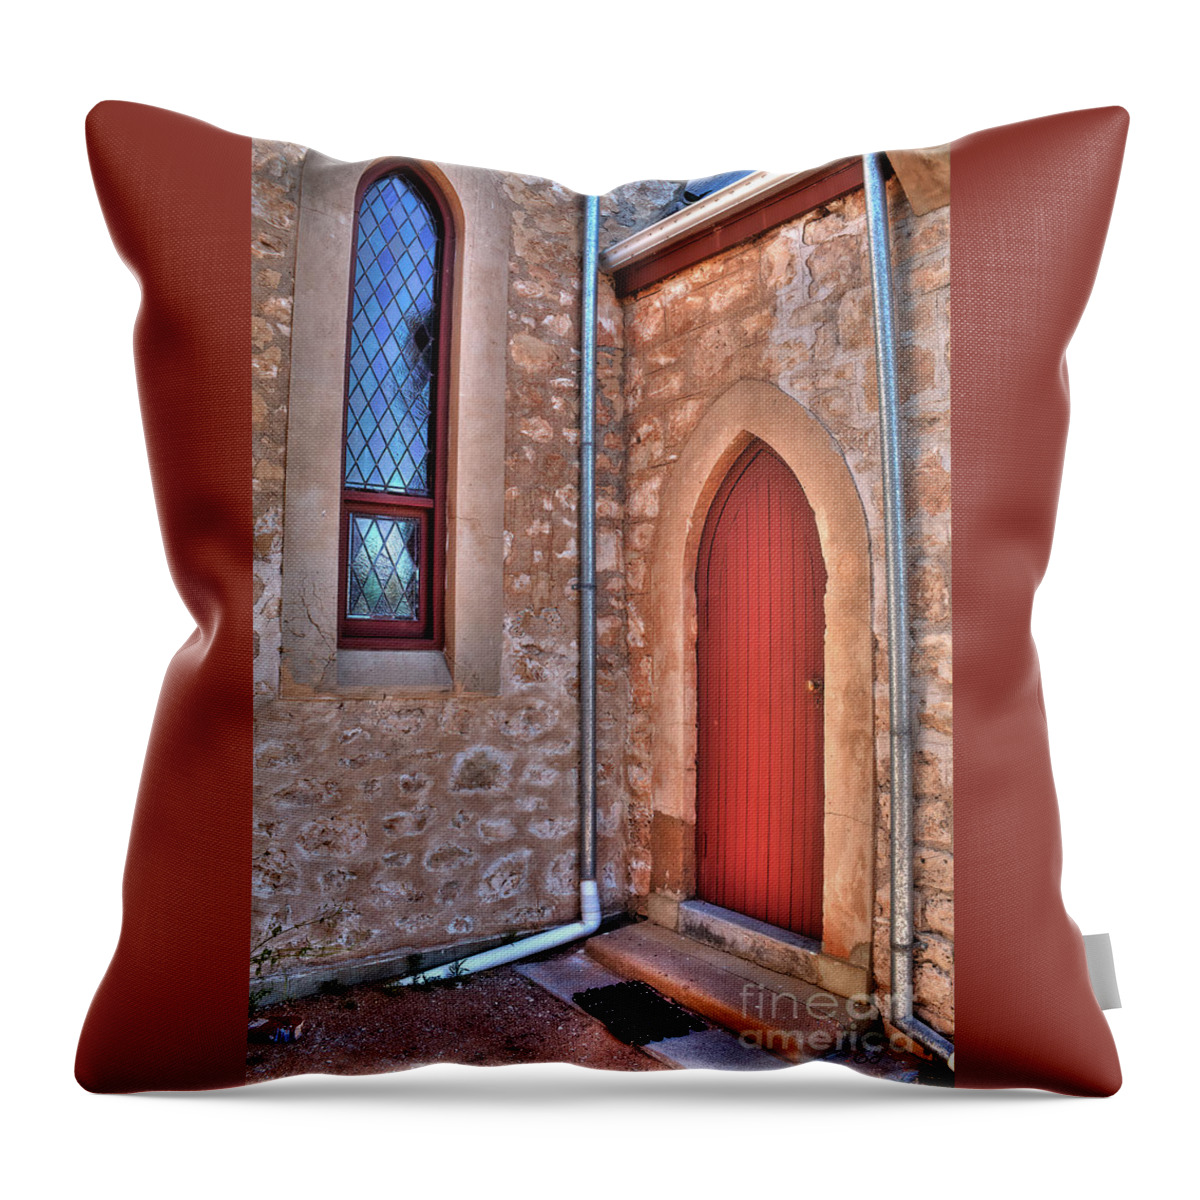 Church Throw Pillow featuring the photograph Church Door and Window by Elaine Teague